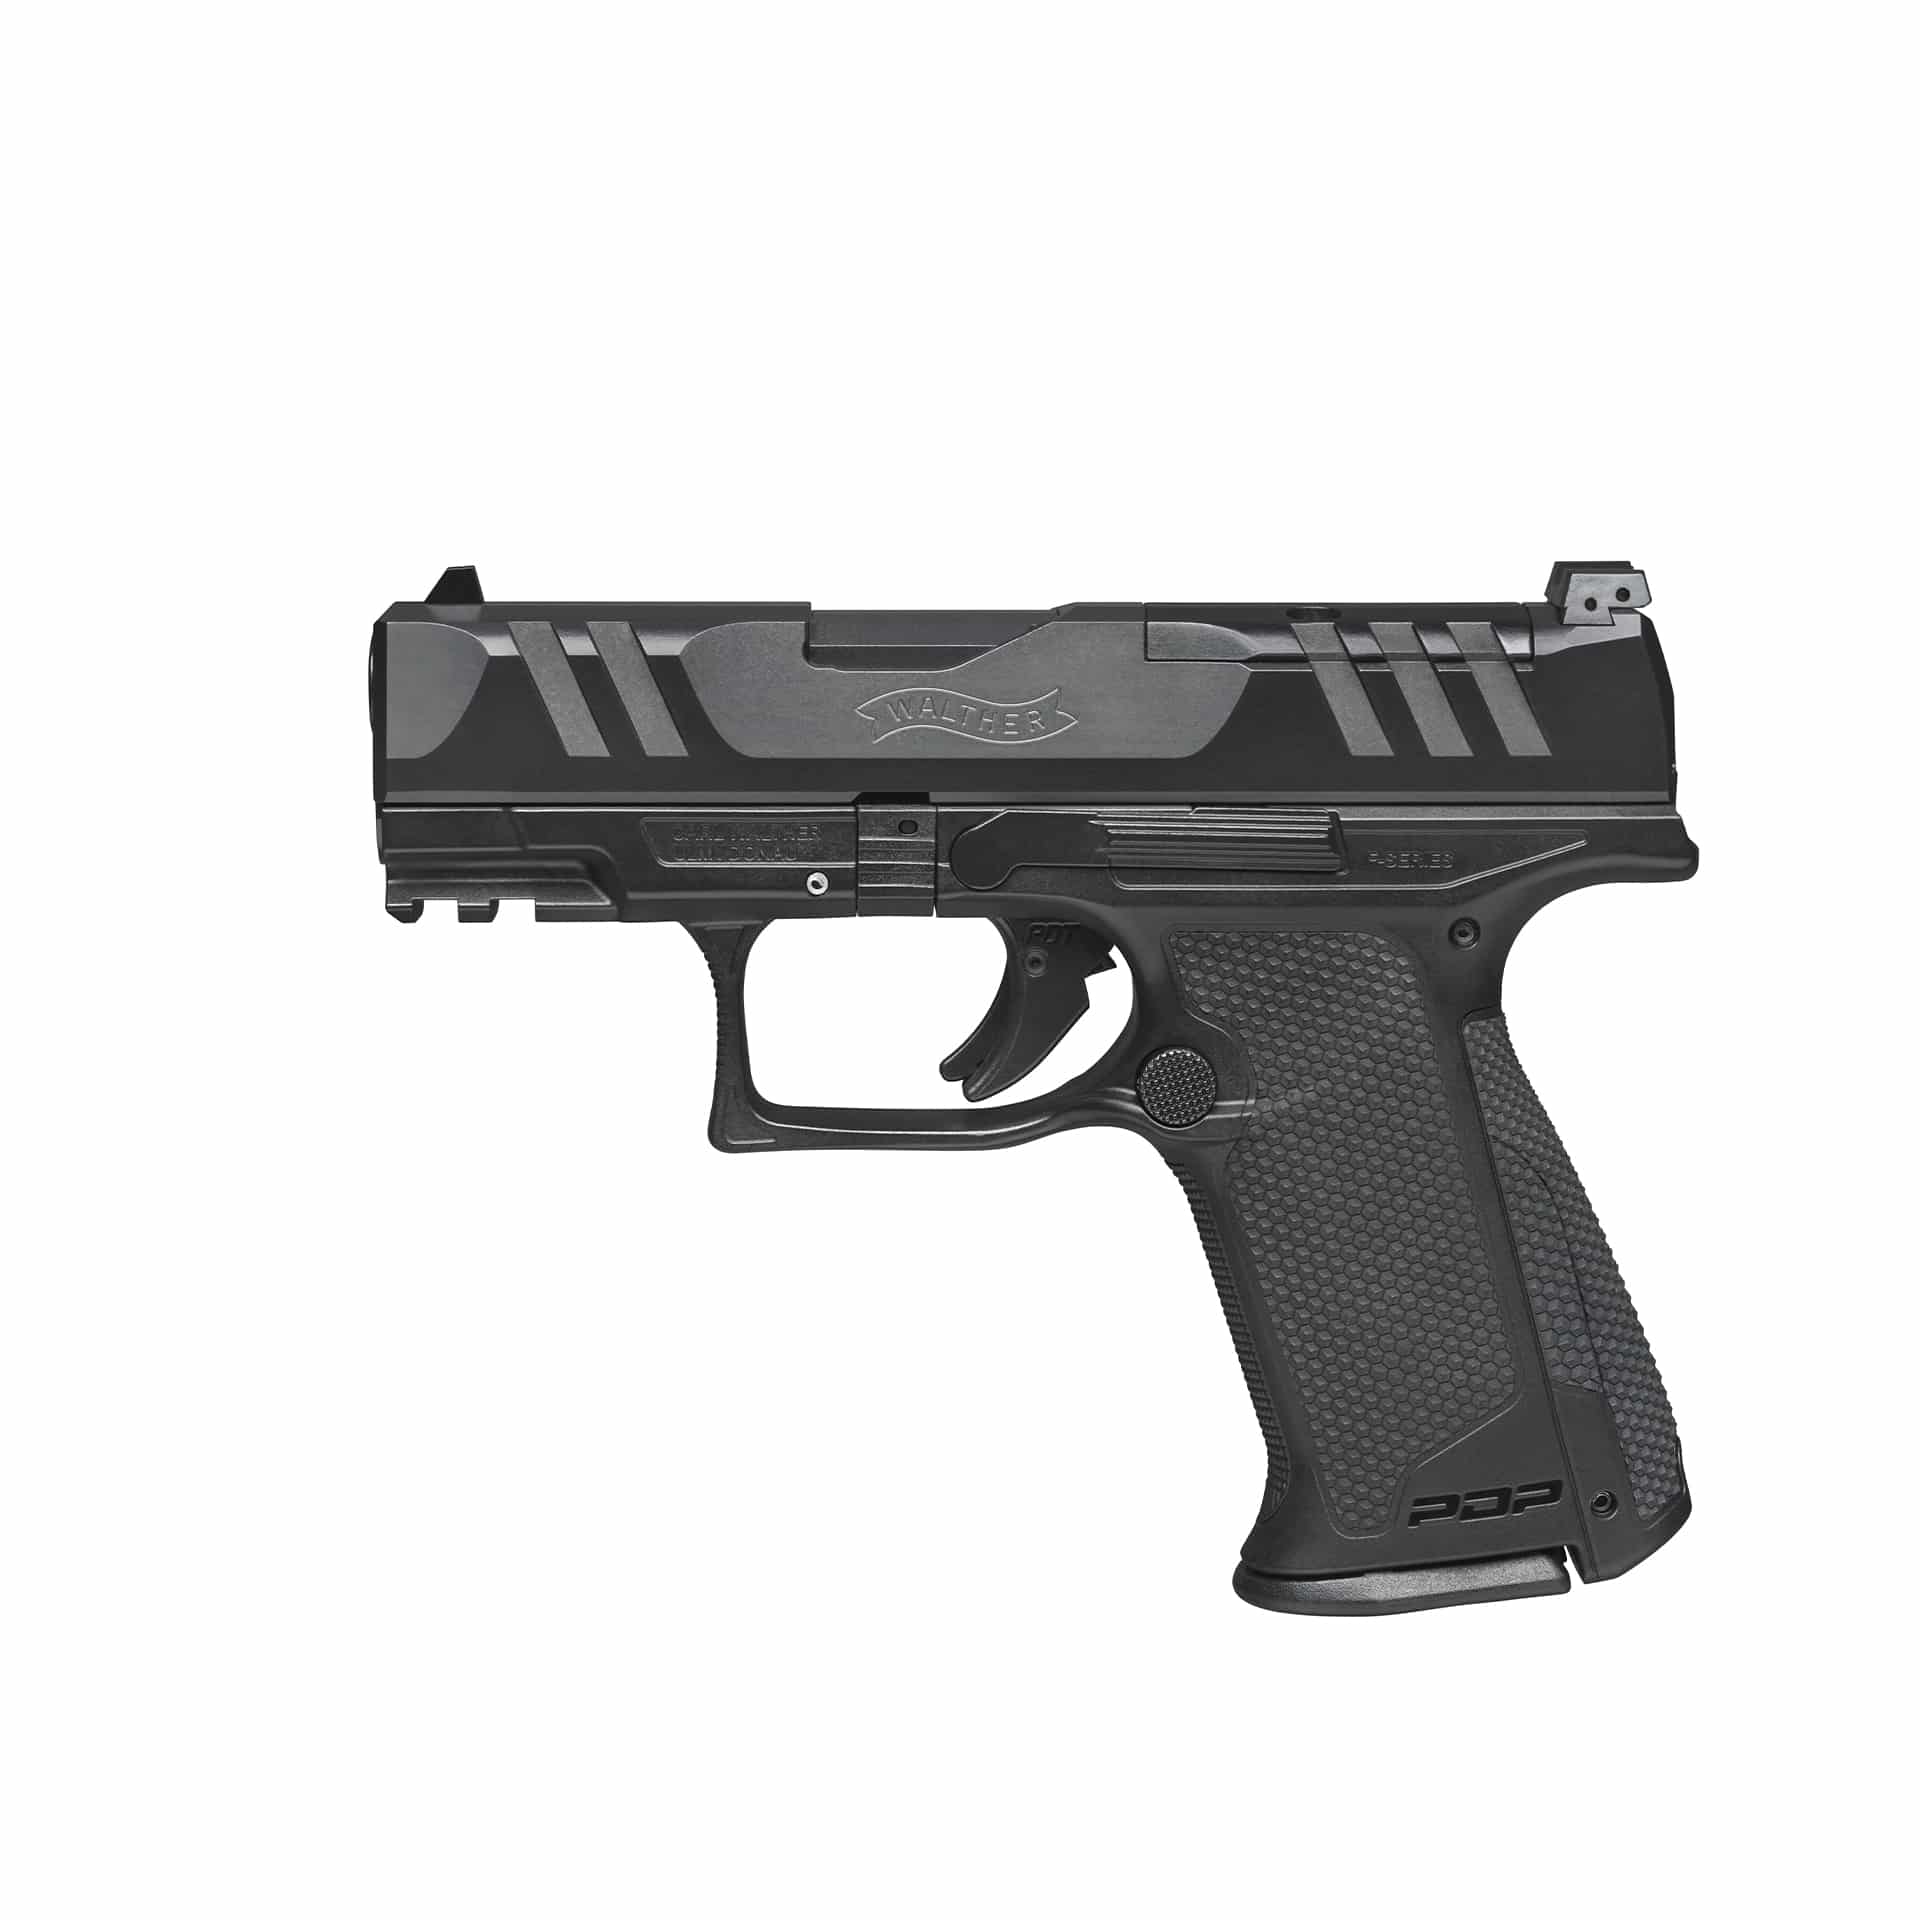 https://cityarsenal.com/product/walther-pdp-f-series-9mm-pistol-black-2849313/